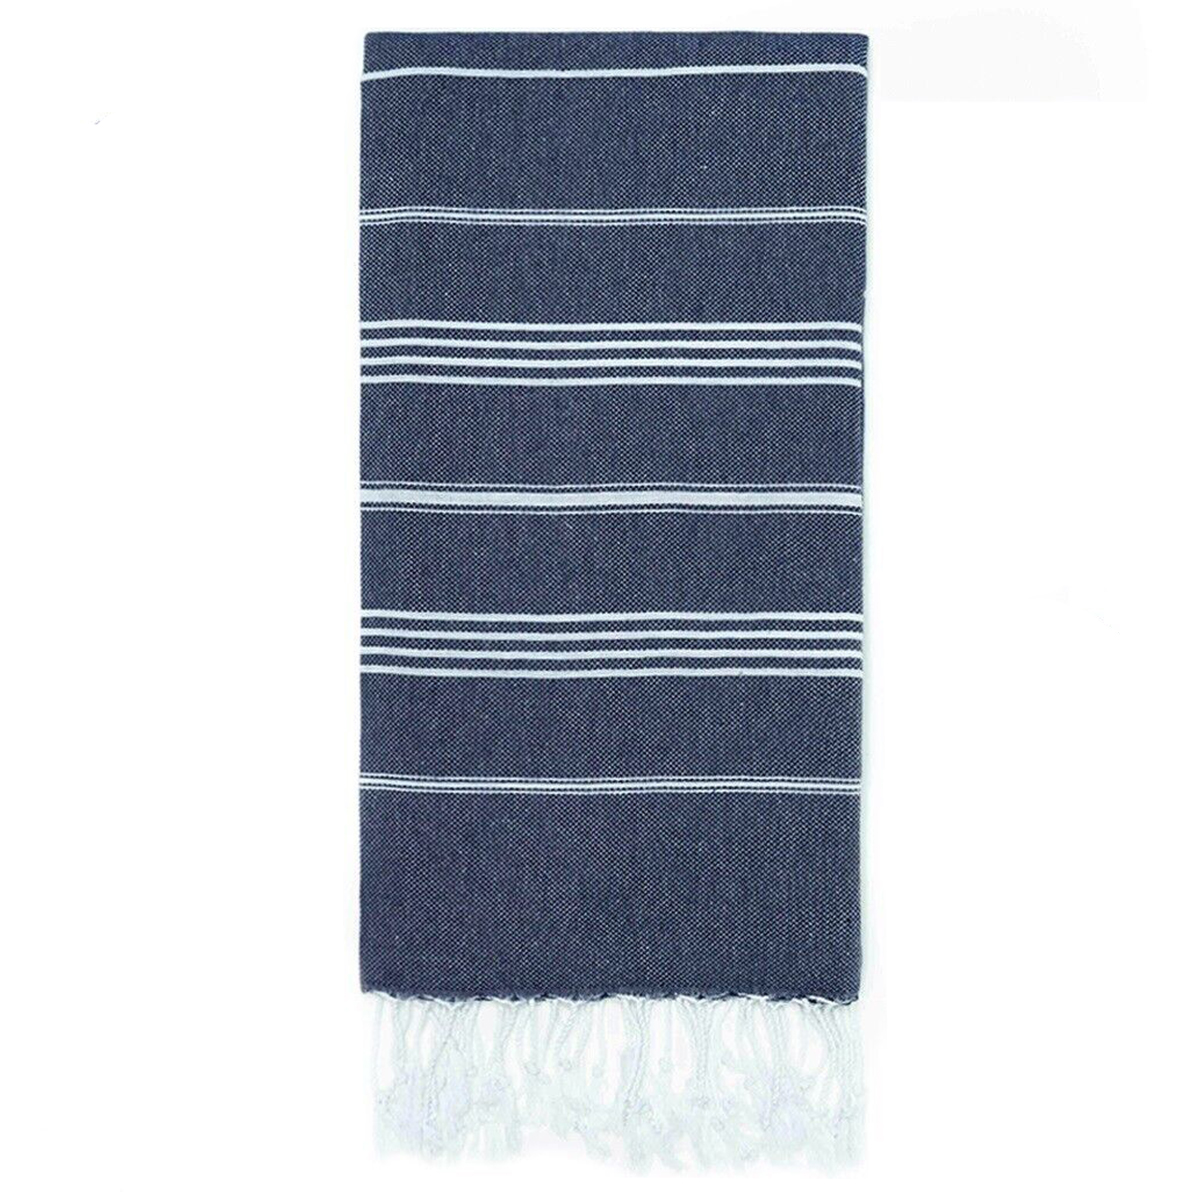 100% Cotton Turkish Towel Light Weight Beach Blanket BathTowel - COPY - olis4i